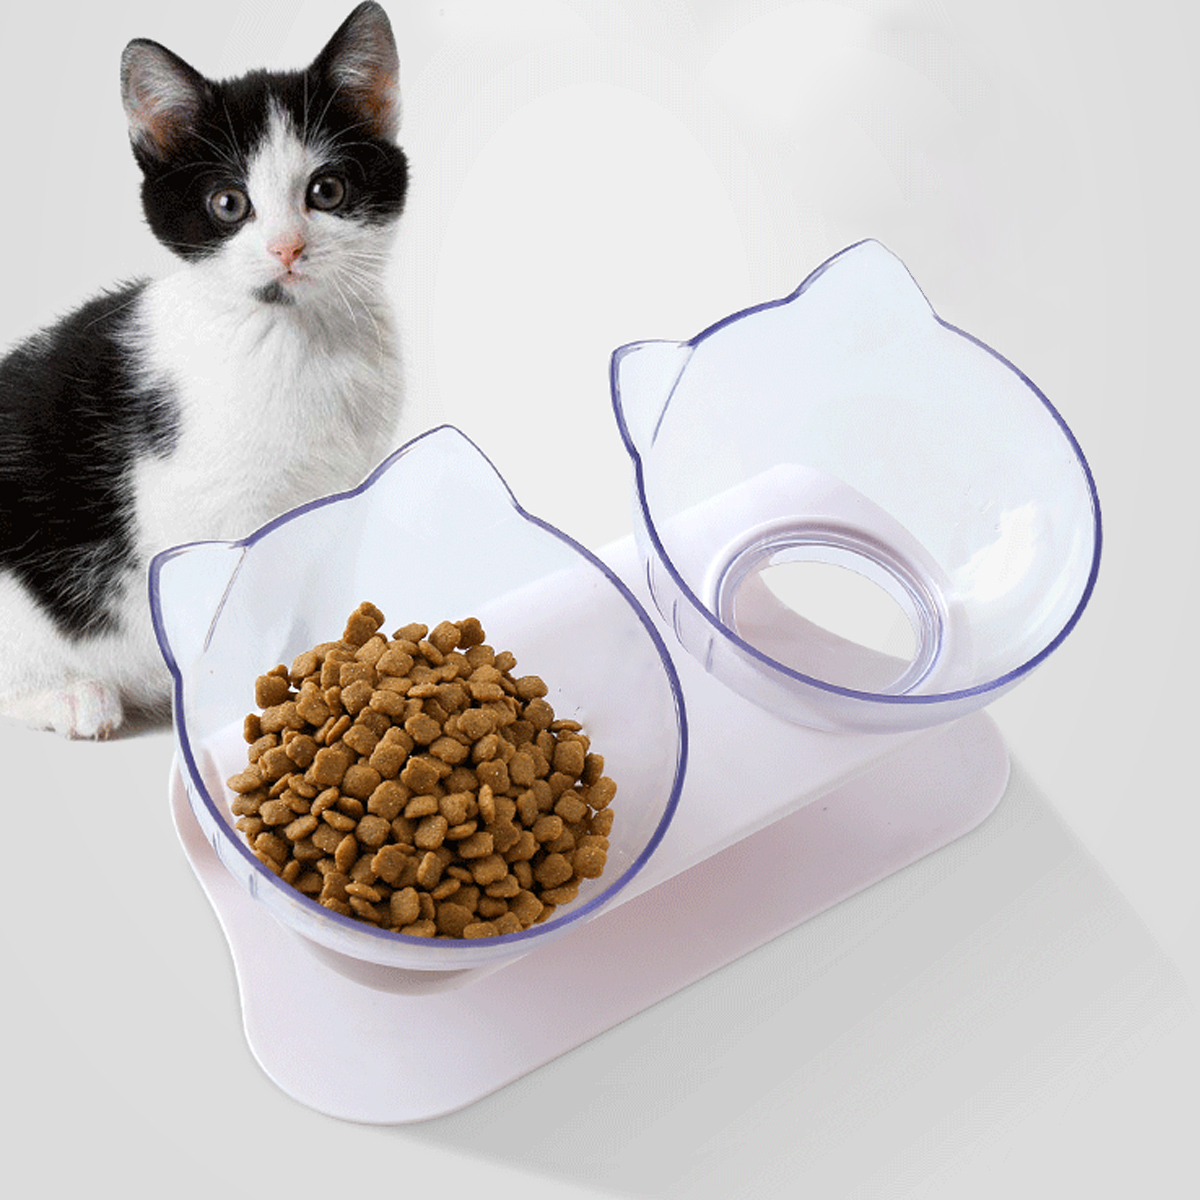 15deg-Tilt-Angle-Cat-Food-Bowl-Raised-Transparent-Protect-Cats-Spine-Anti-Vomiting-Cat-Dish-Removabl-1881162-10